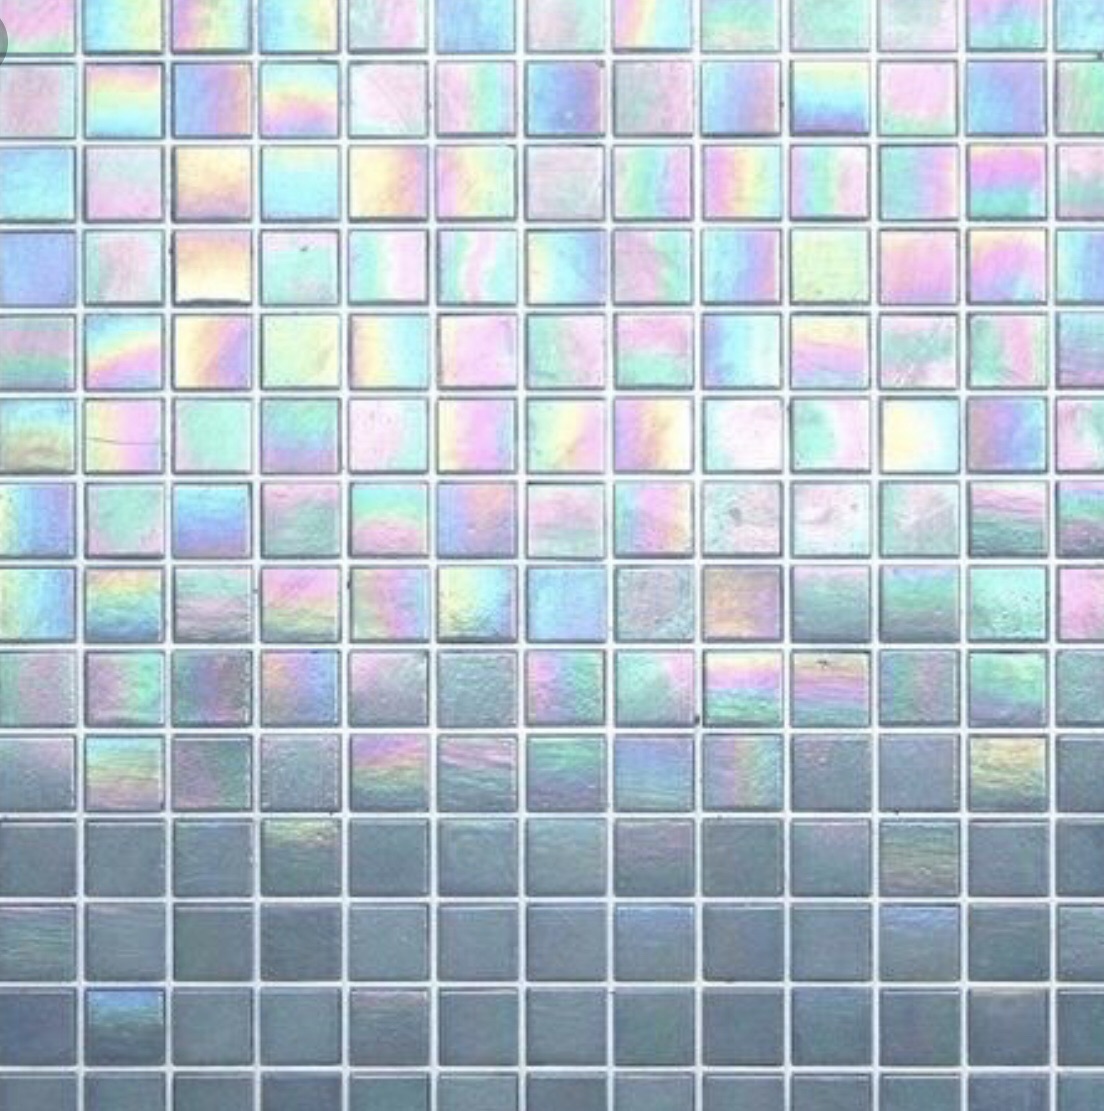 Grunge, Wallpaper, And Background Image - Hologram Tiles - HD Wallpaper 